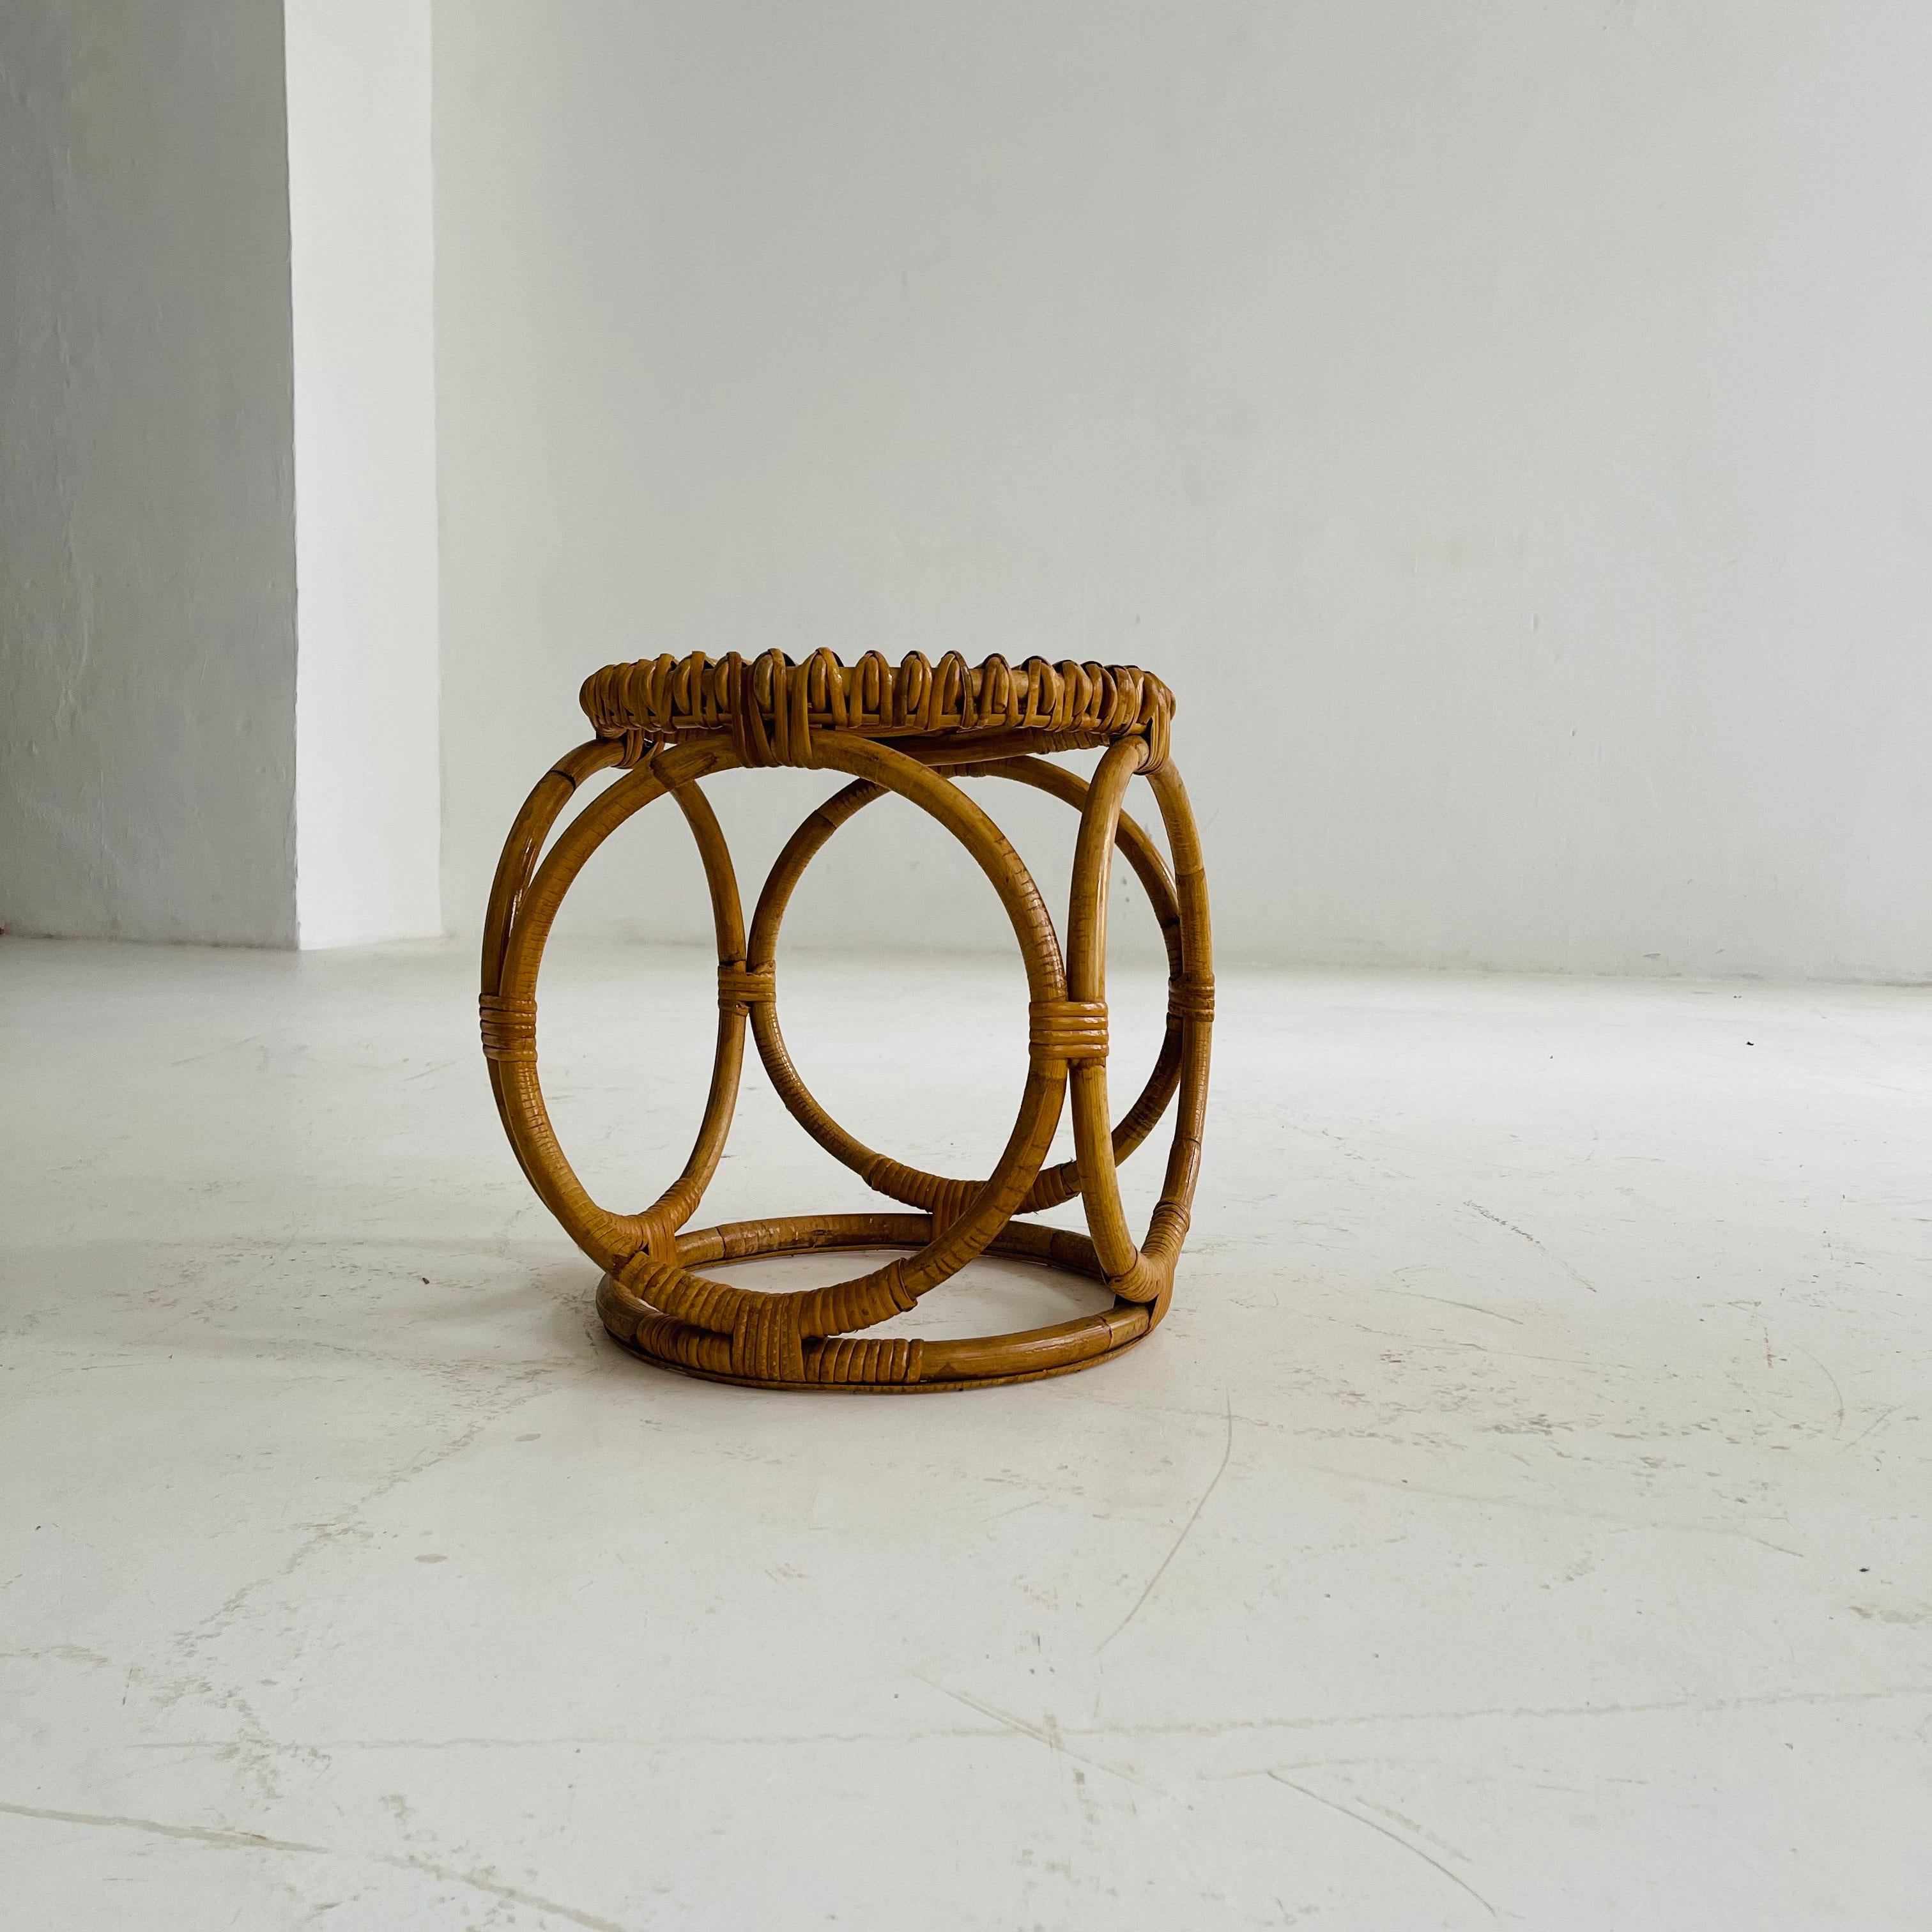 Bamboo style woven rattan wicker stool, Italy, 1970s.